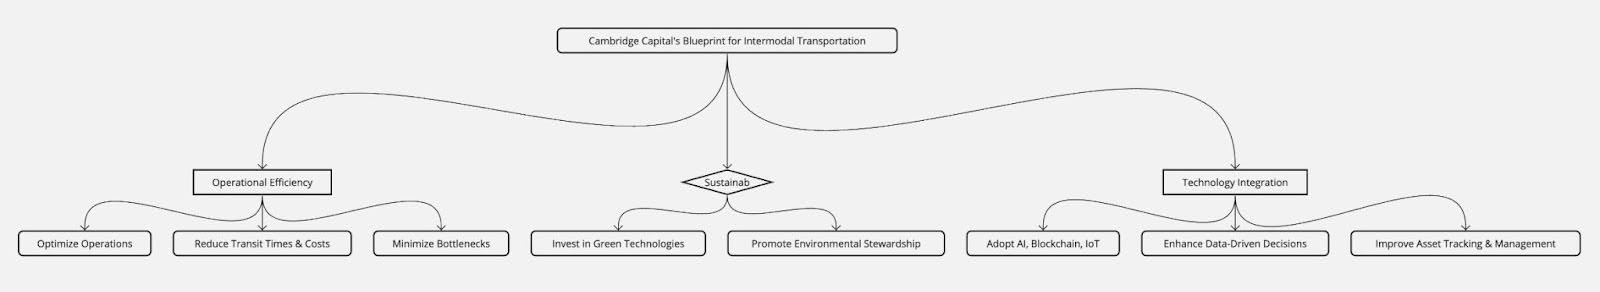 Cambridge Capital's Blueprint for Intermodal Transportation